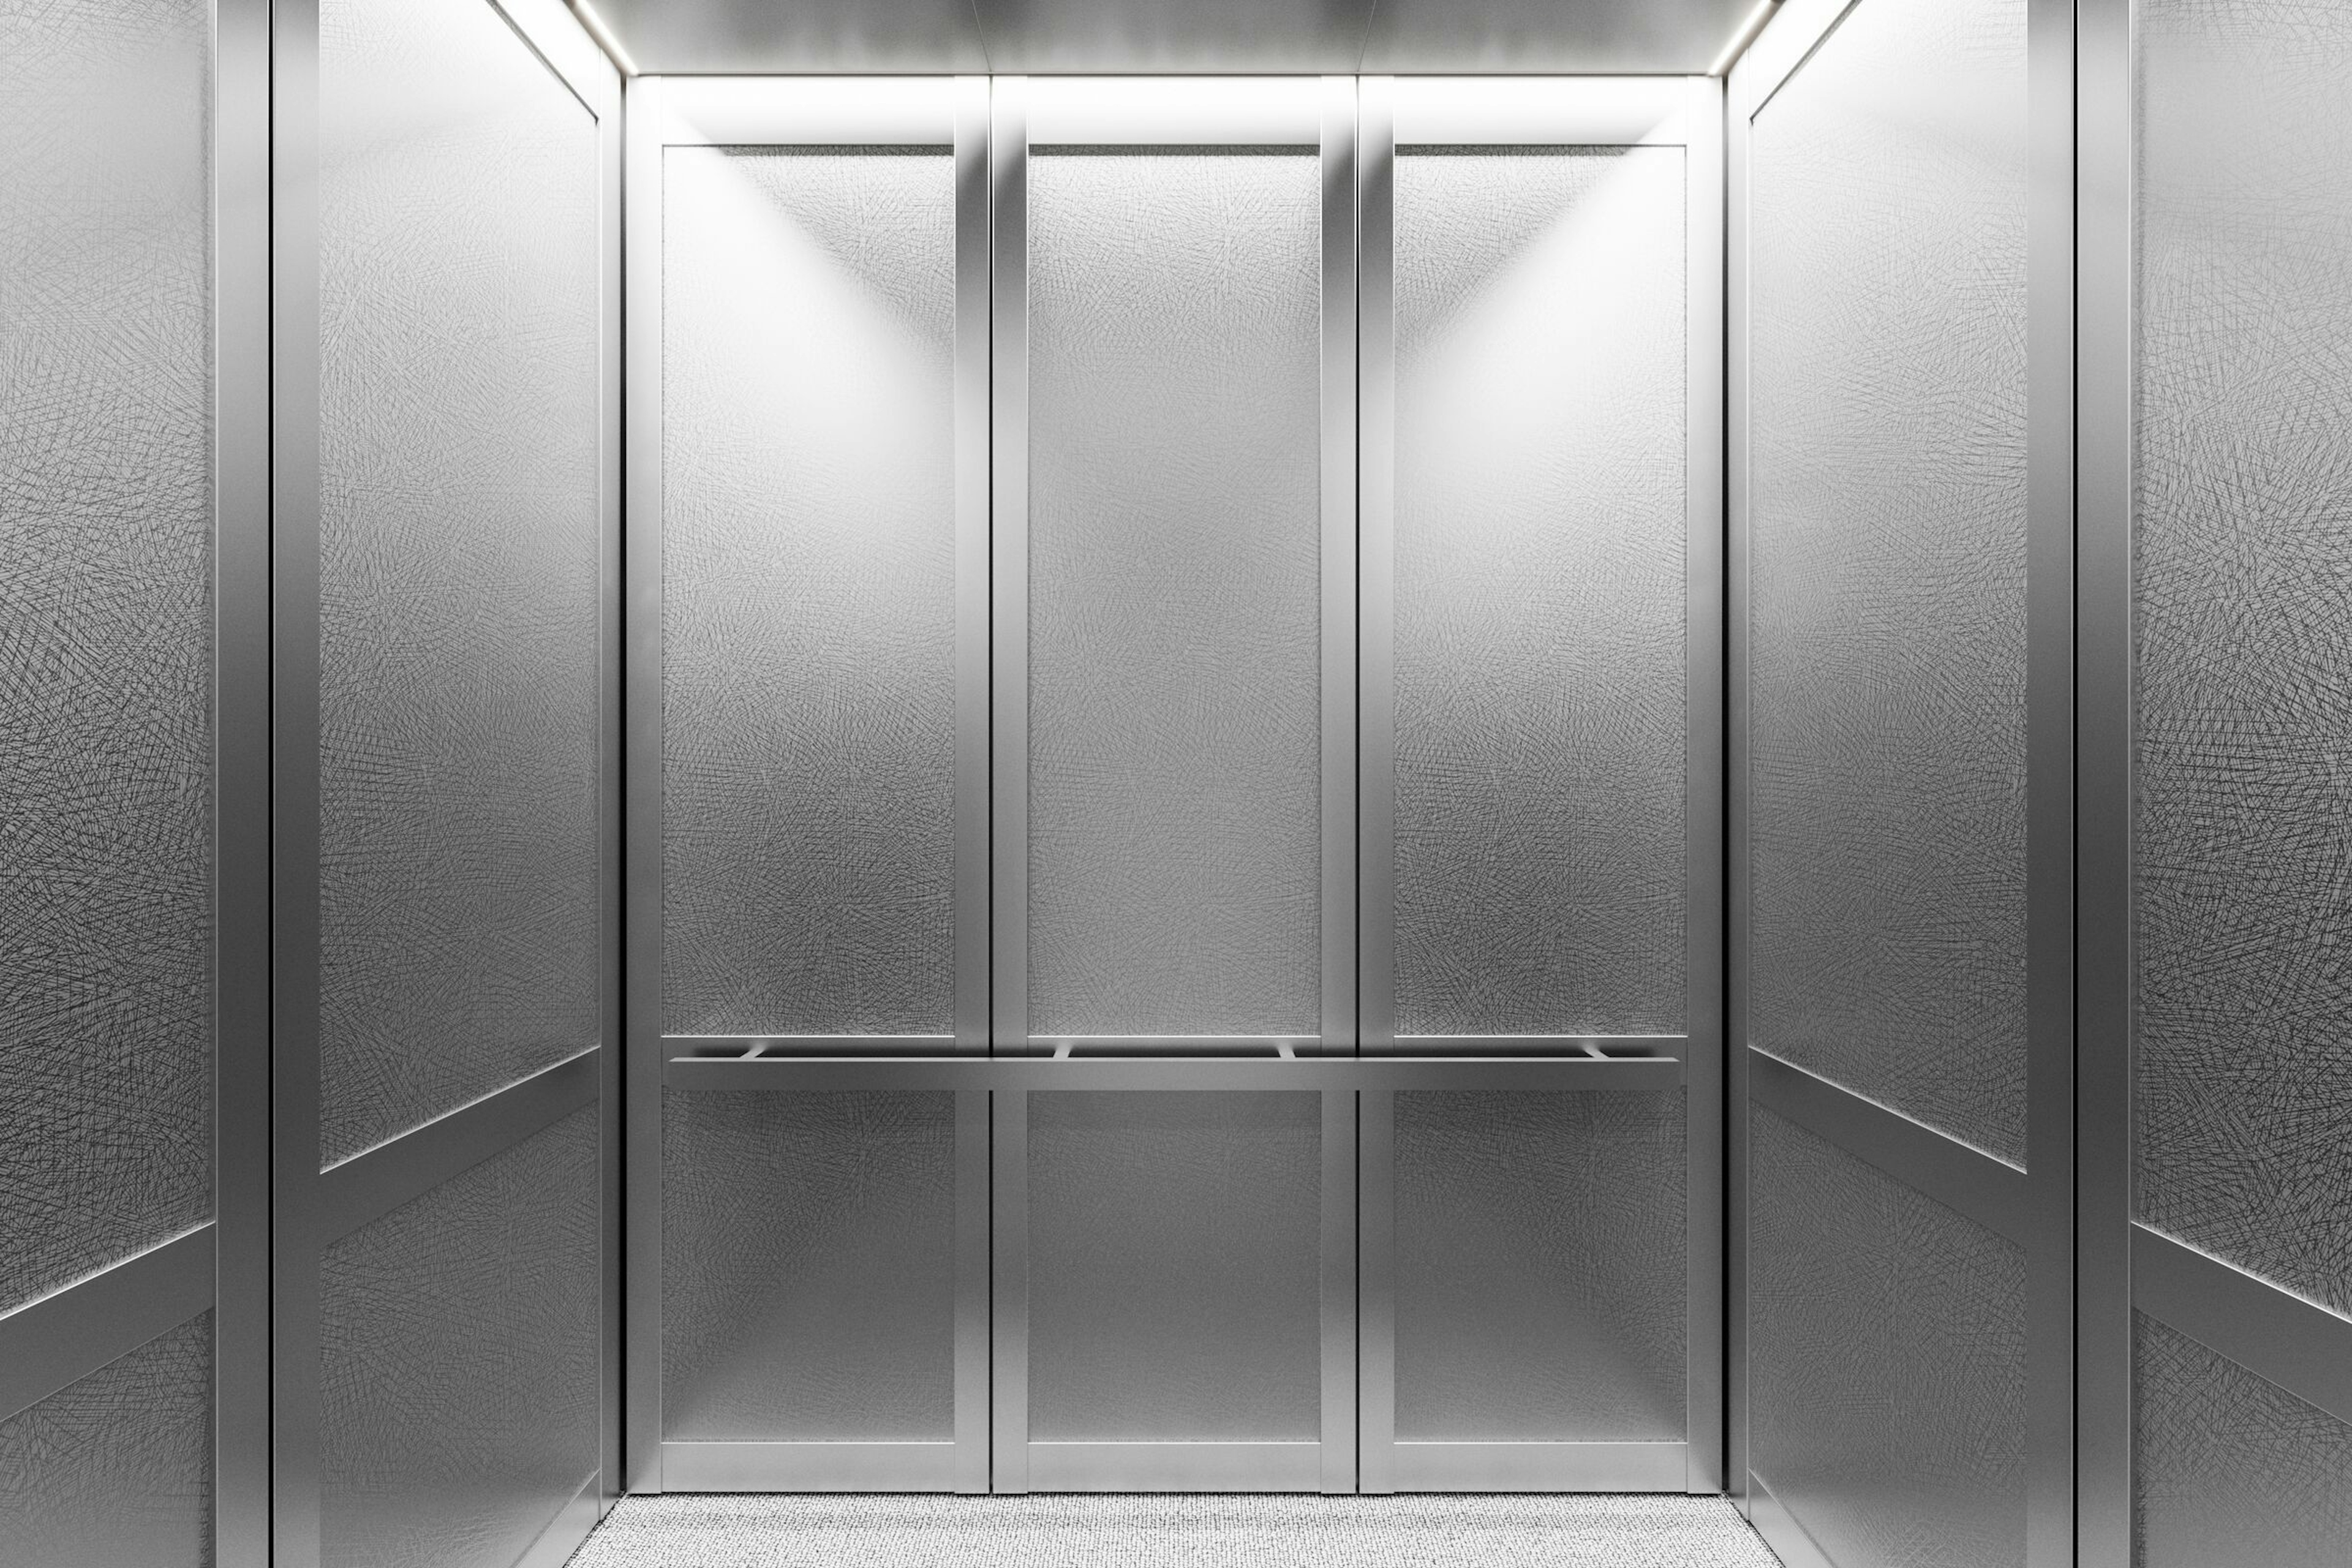 LEVELc-2000 Elevator Interiors: undefined